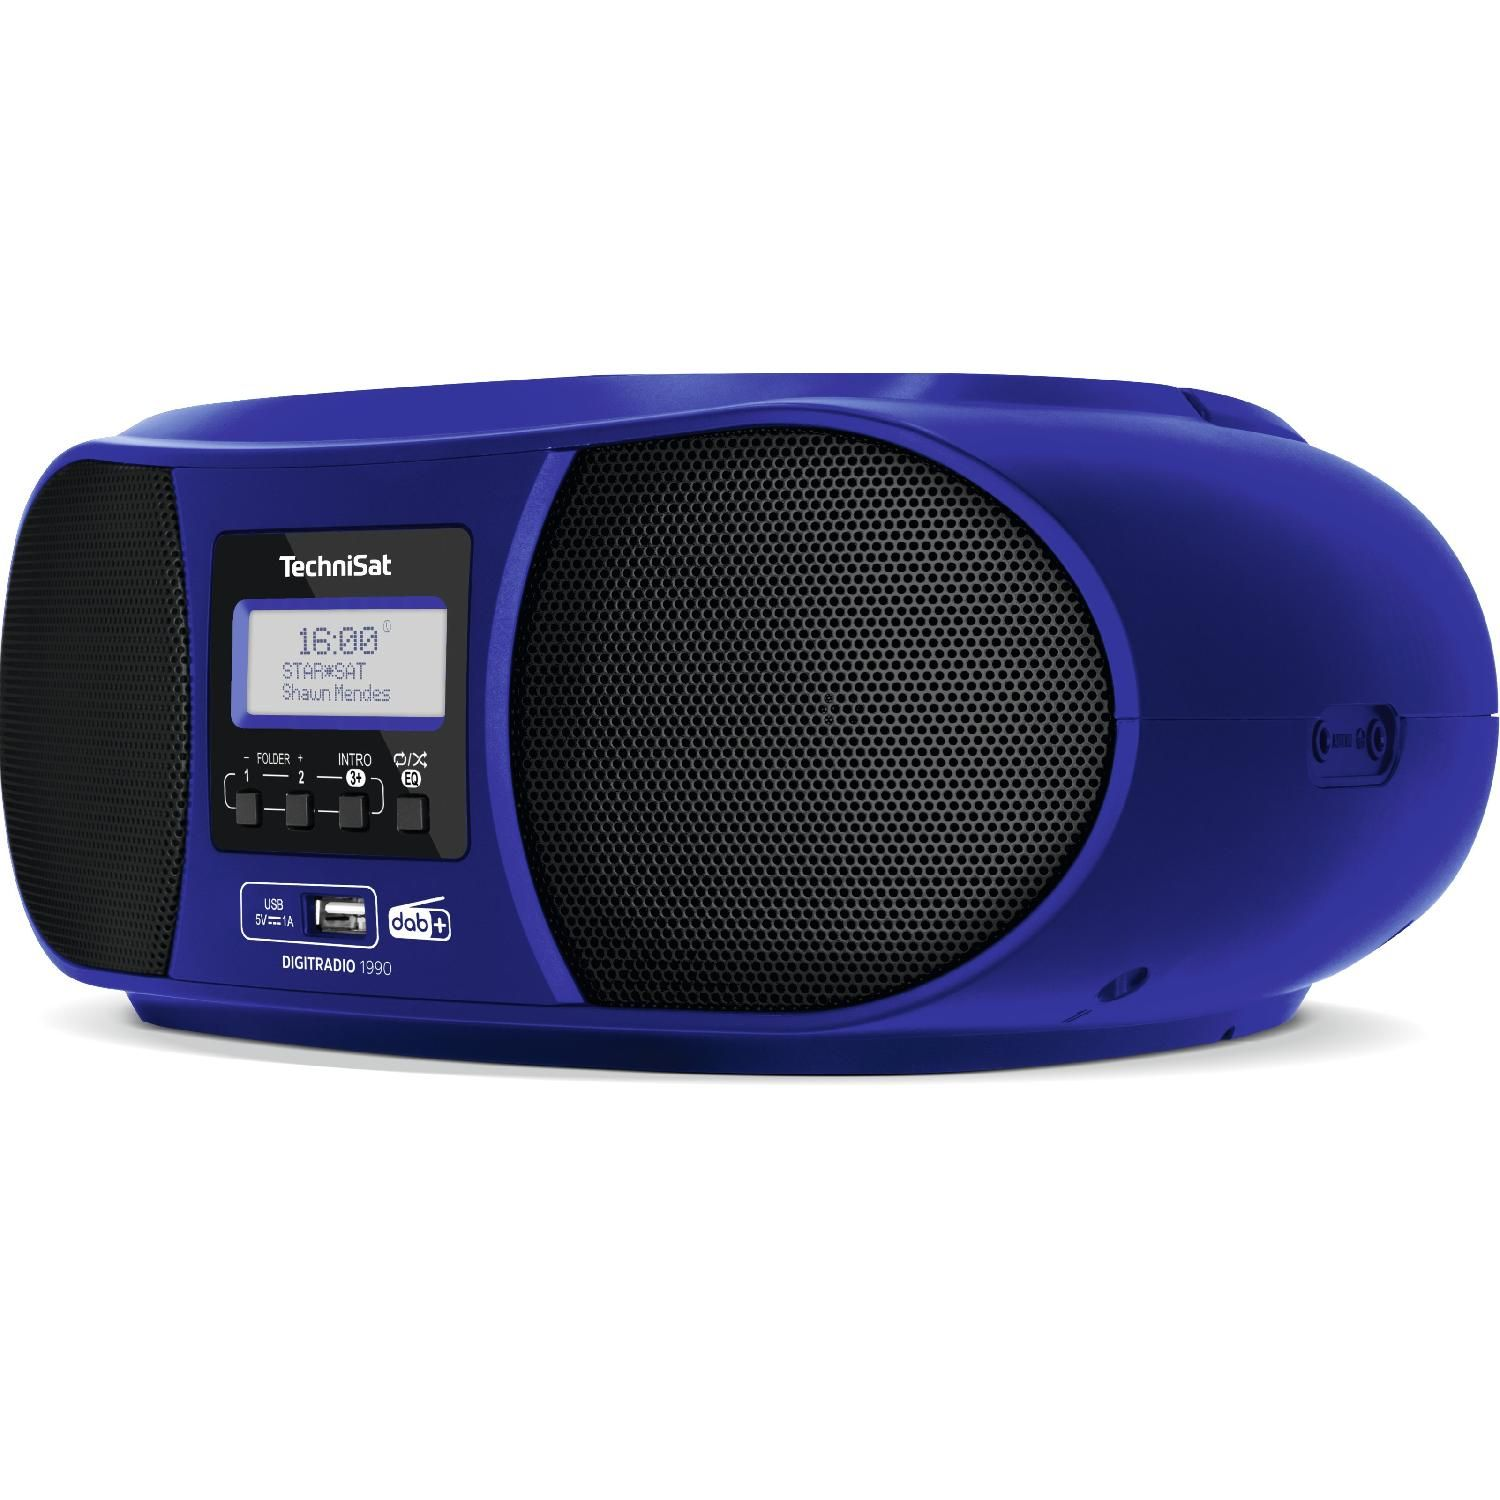 1990 DAB-Radio, Bluetooth, FM, blau TECHNISAT DigitRadio